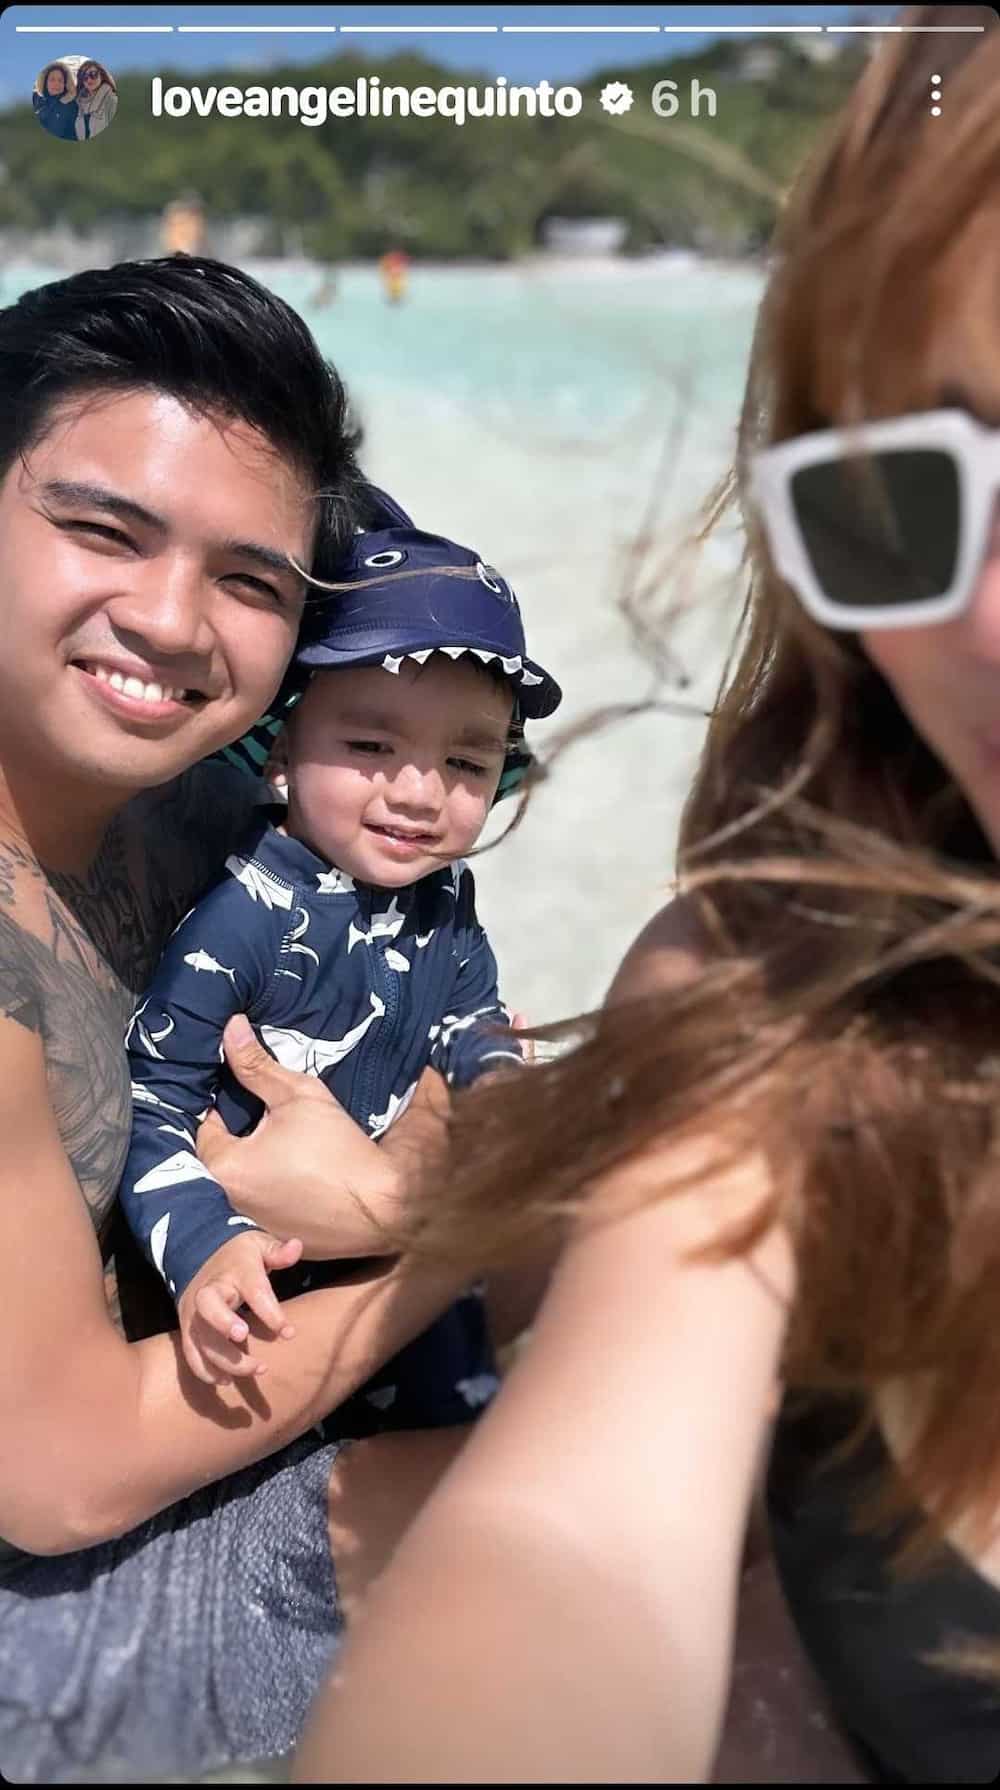 Angeline Quinto shares glimpses of getaway with partner Nonrev Daquina, son Sylvio